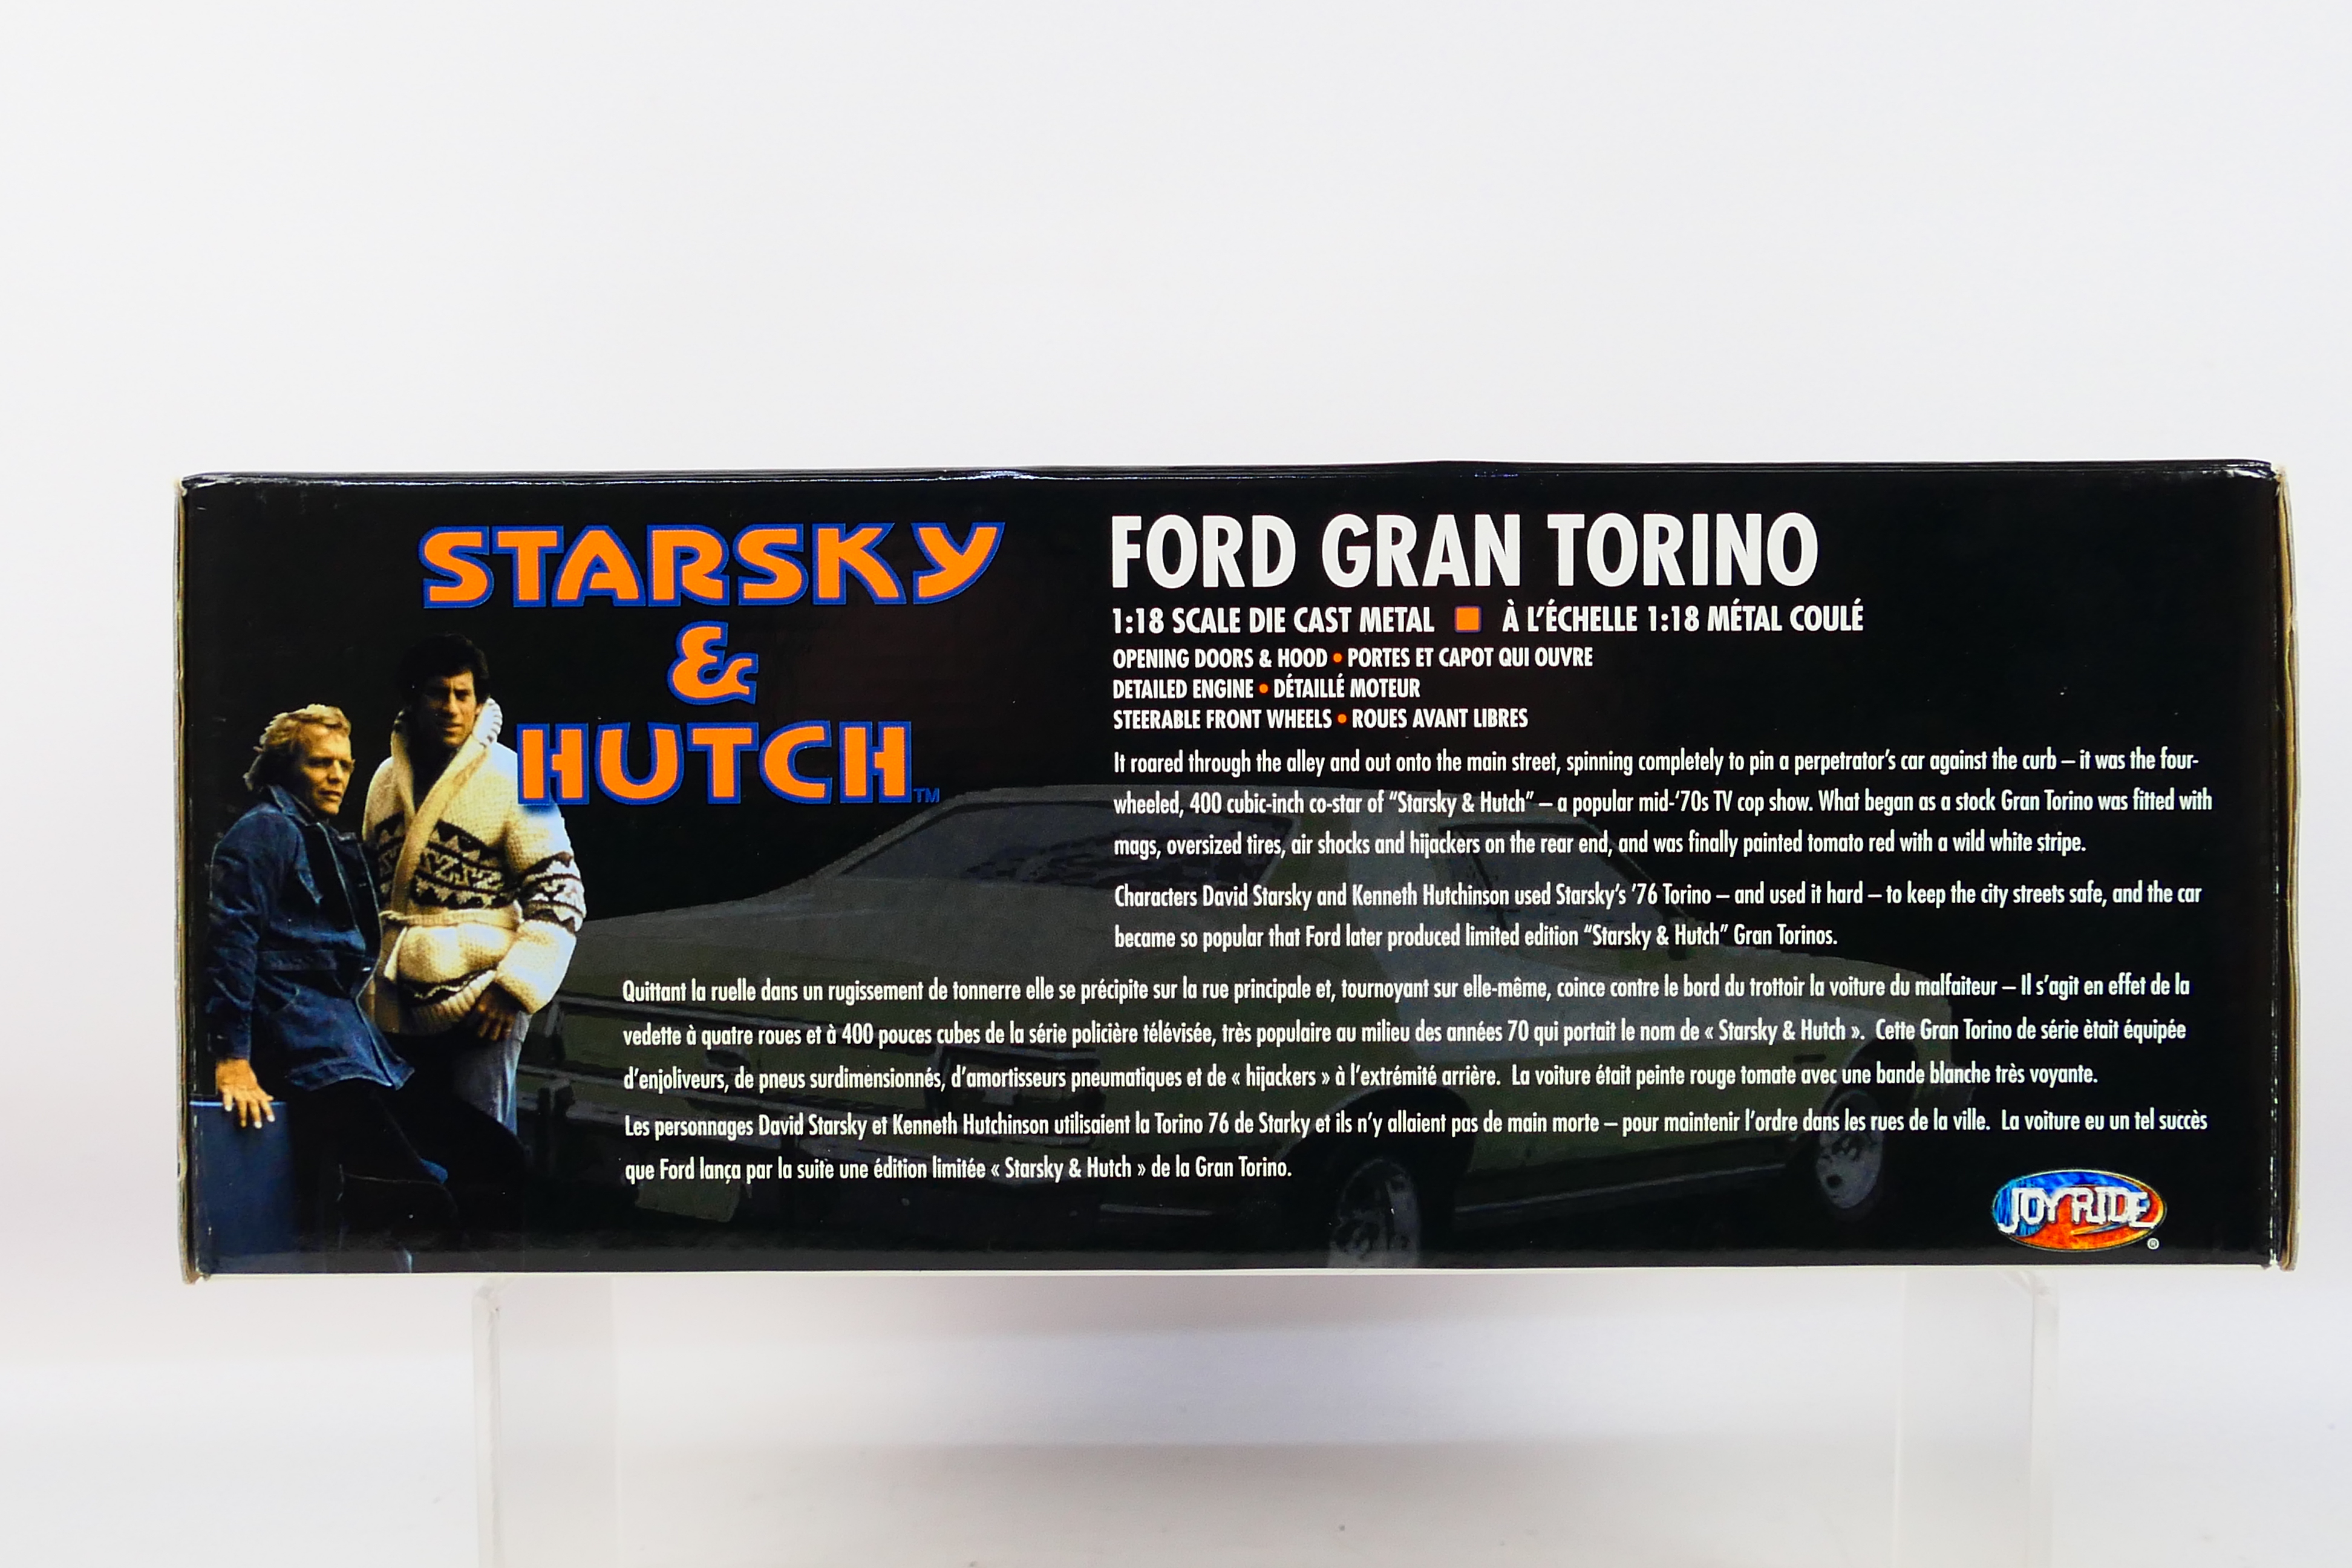 Joyride - A boxed Joyride #33151 1:18 scale 'Starsky & Hutch' Ford Gran Torino. - Image 5 of 5